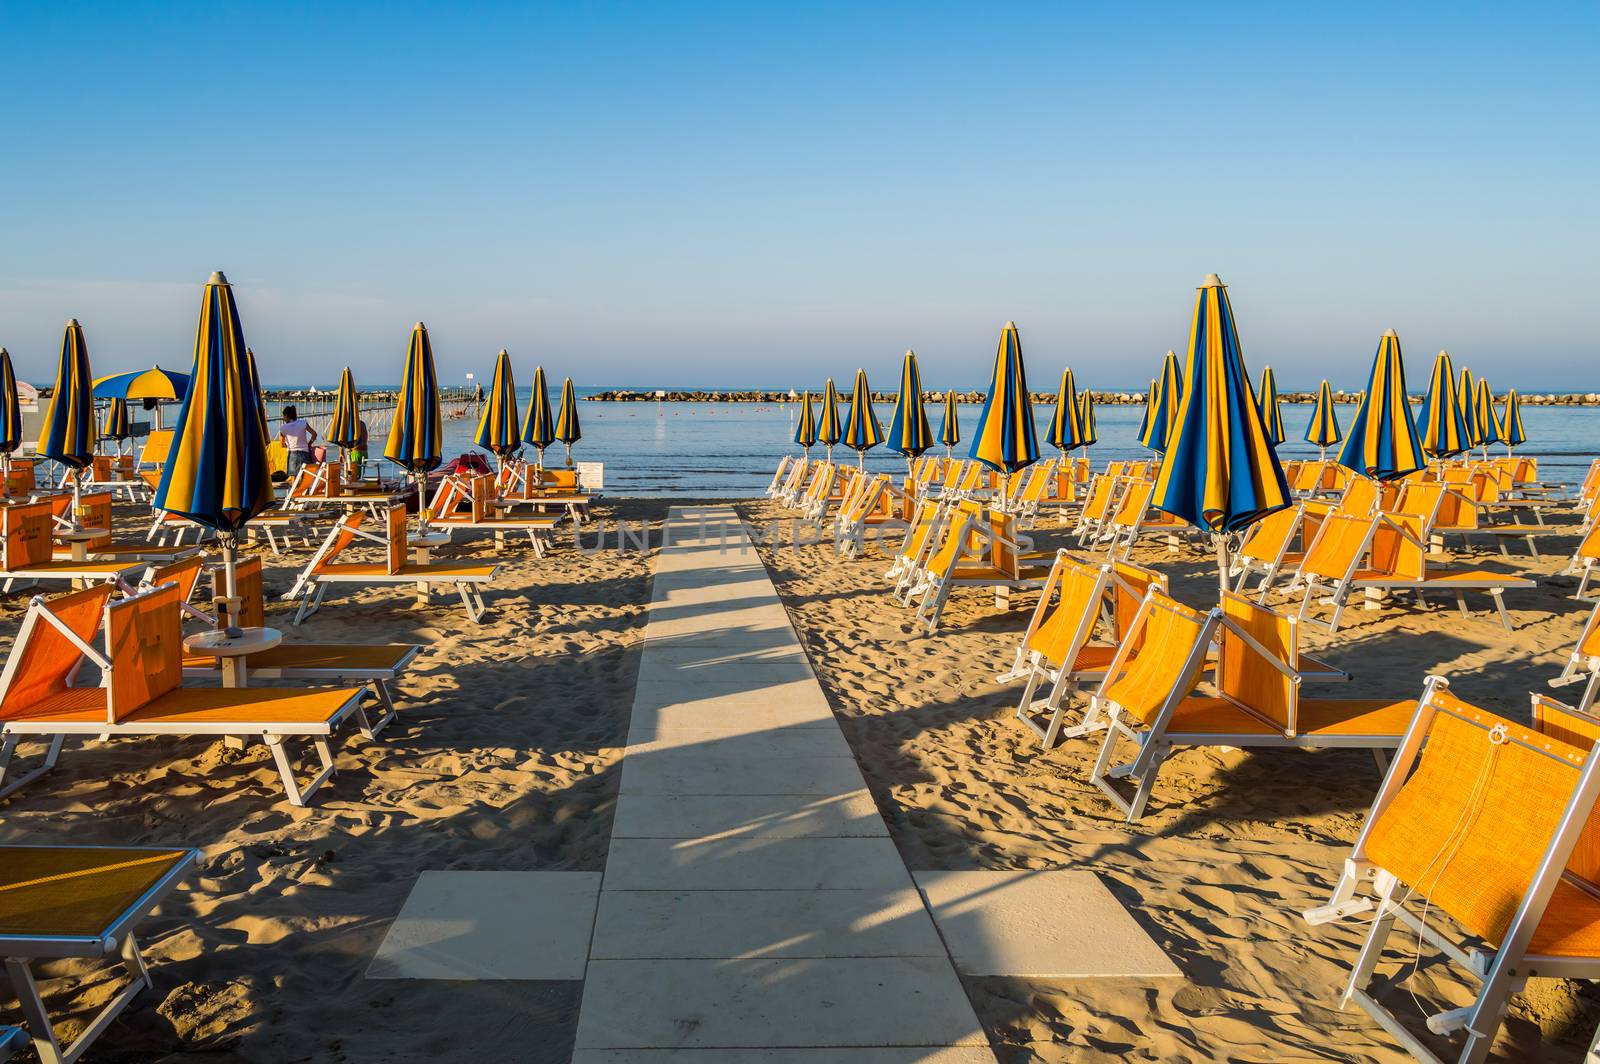 Rows of orange umbrellas and deckchairs on the beach of Igea Marina near Rimini